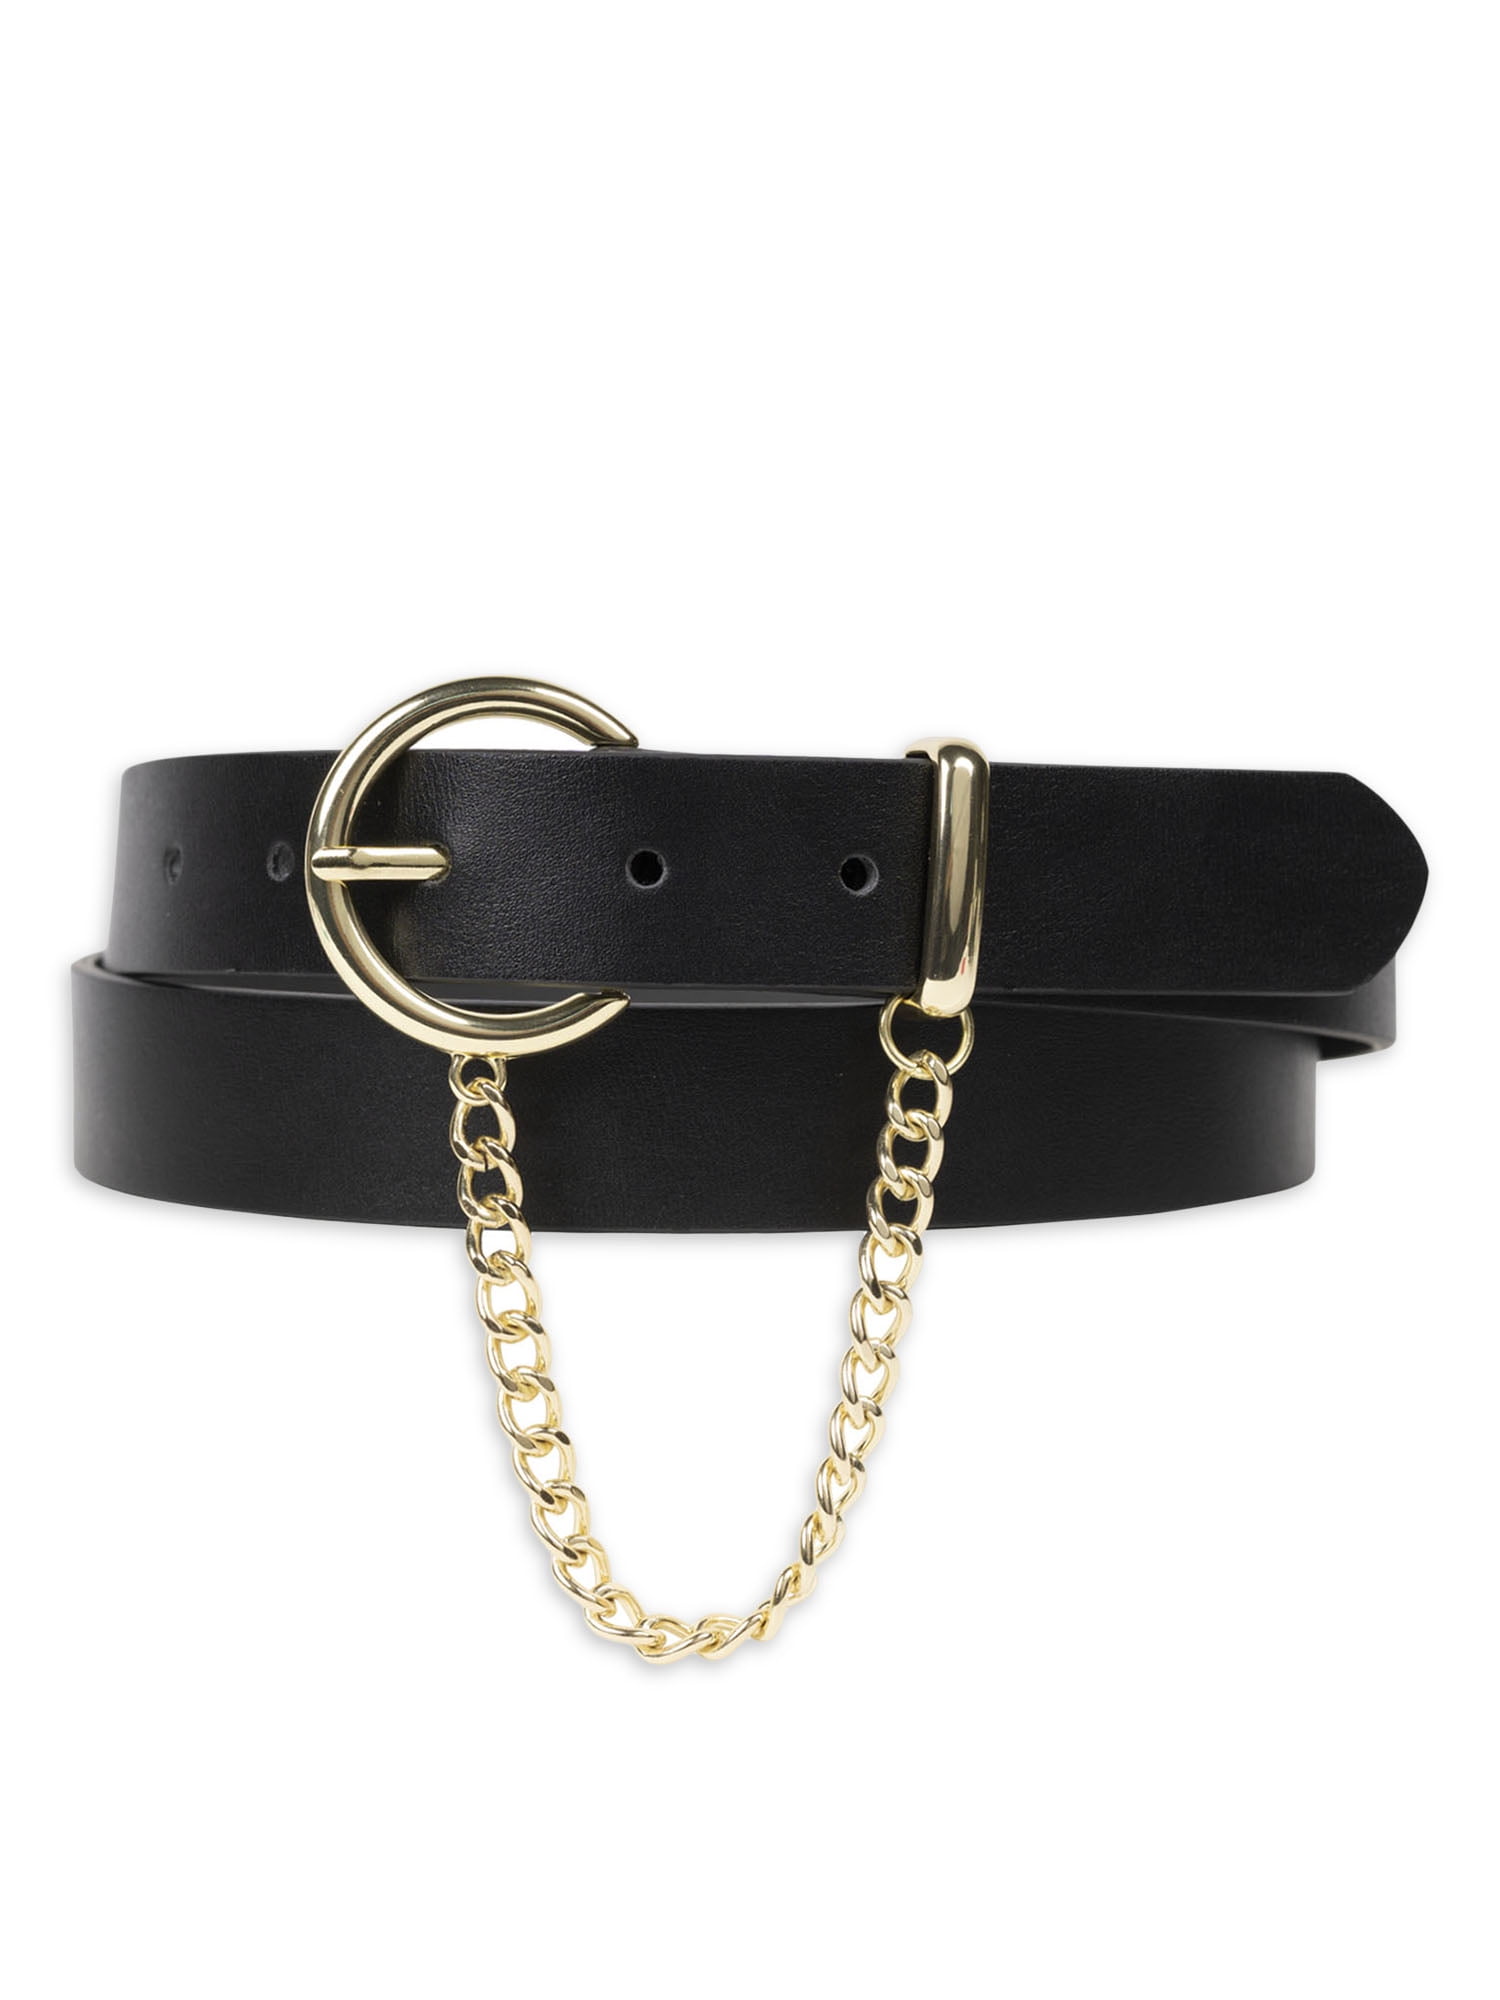 styling #rules #chain #belts #black #dress #boots #chain #gold #belt #for  #and9 Rules for Styling Chain Belts black dress, boots …